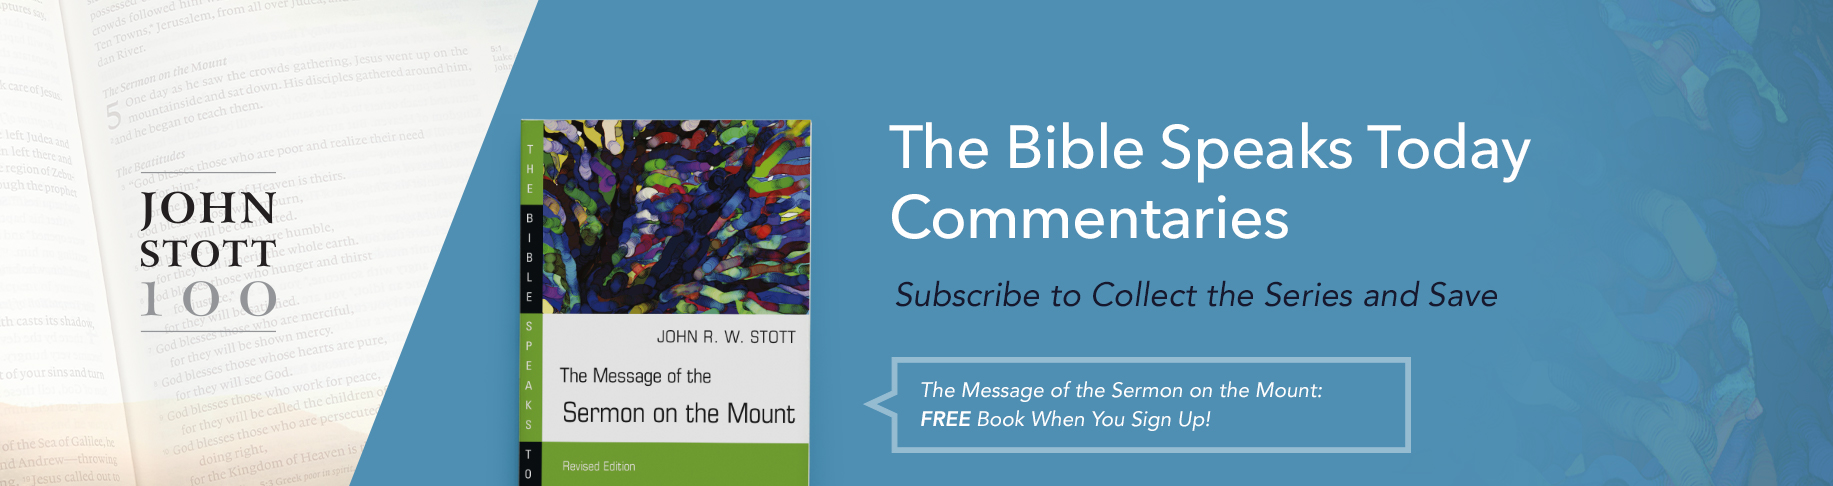 Bible Speaks Today Commentary Program